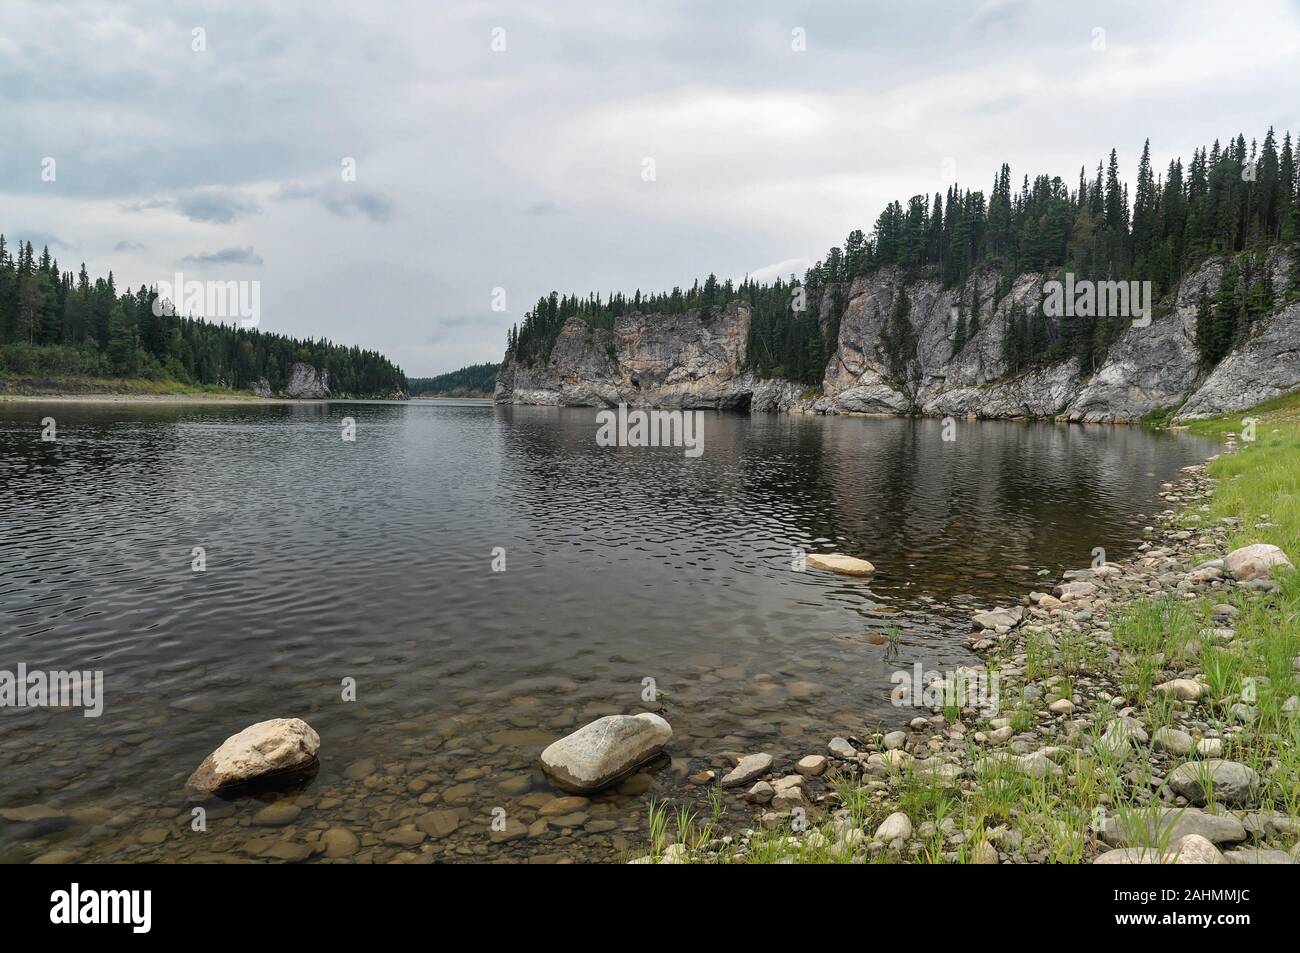 'Komi Virgin Forests' - a UNESCO World Heritage Site. Schugor River in the Yugyd VA National Park, Komi Republic, Northern Urals. Russia. Stock Photo